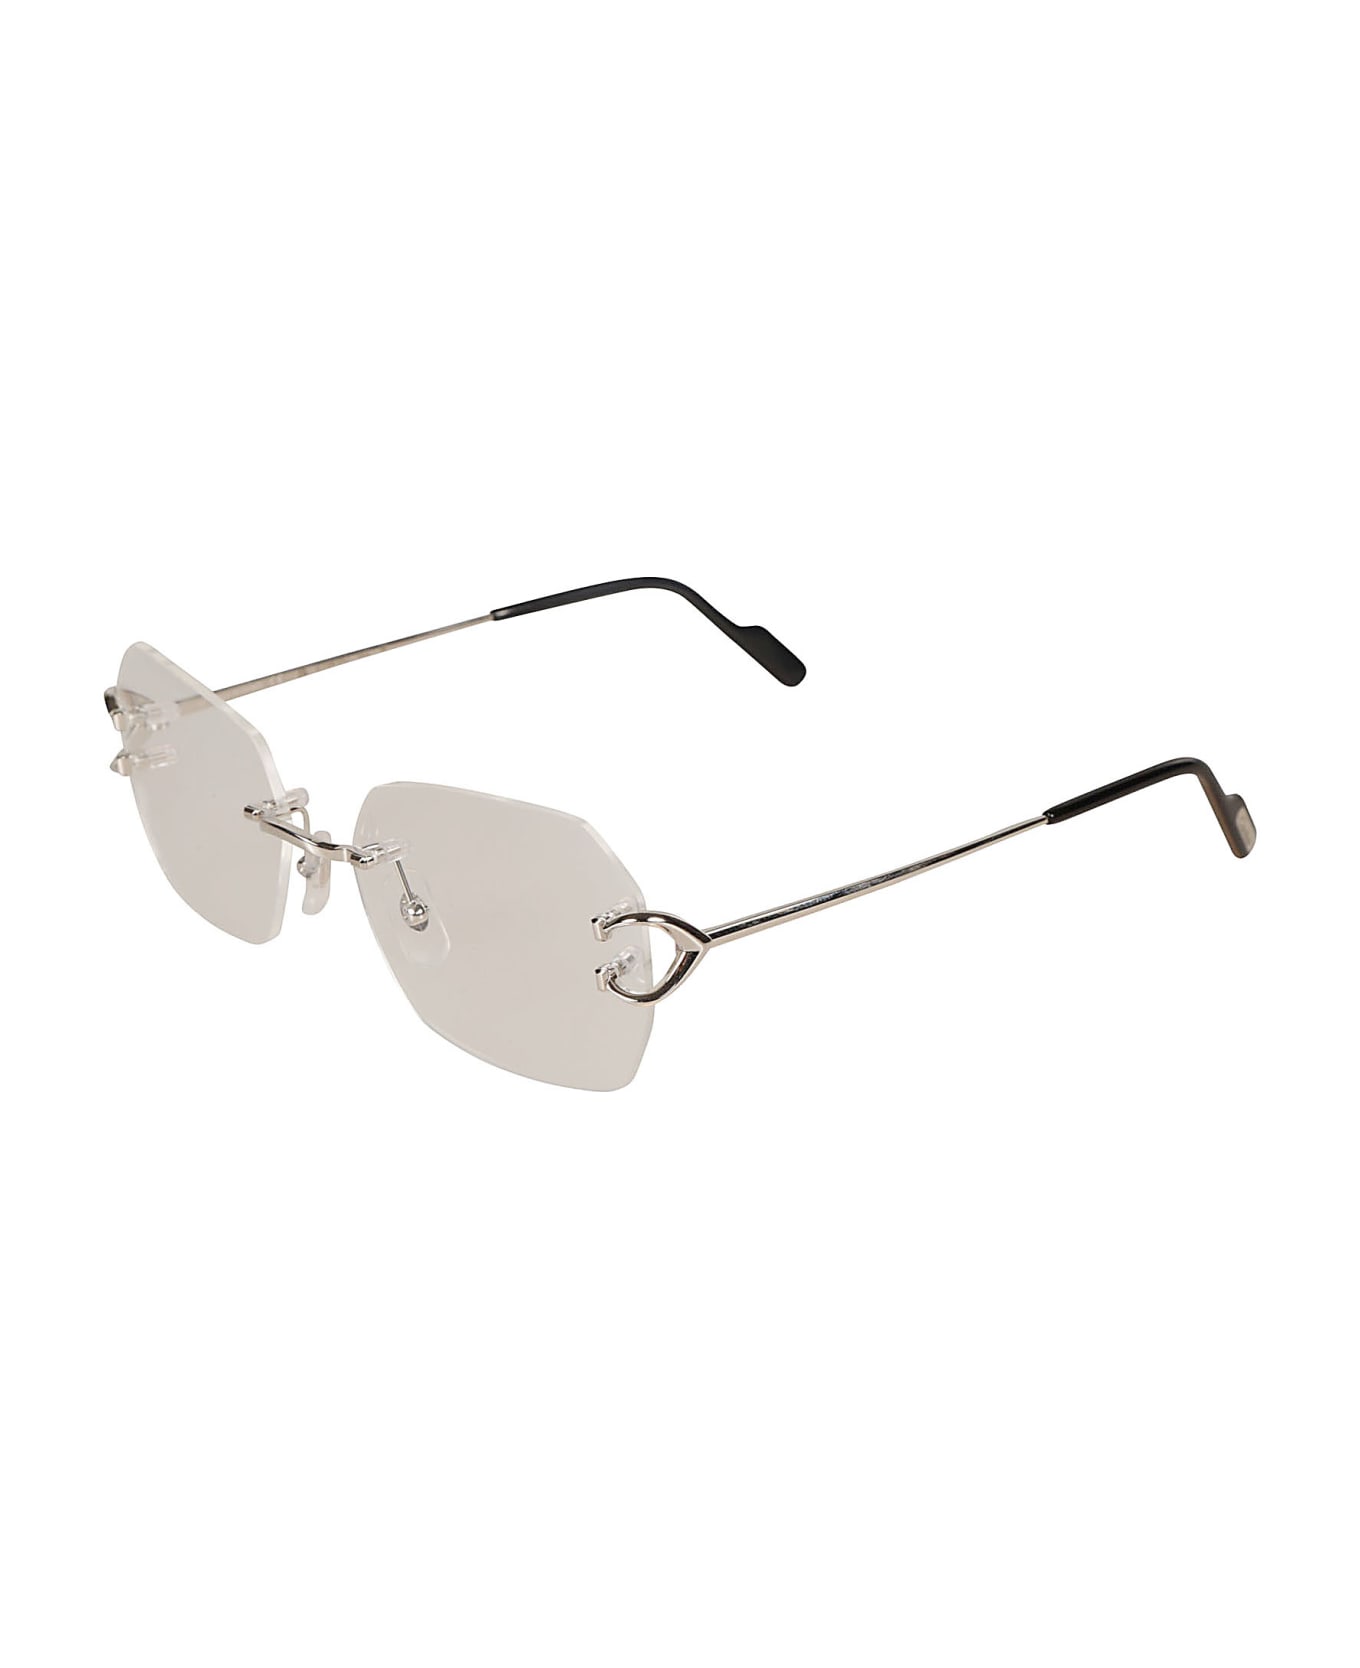 Cartier Eyewear Square Frame Glasses - Silver